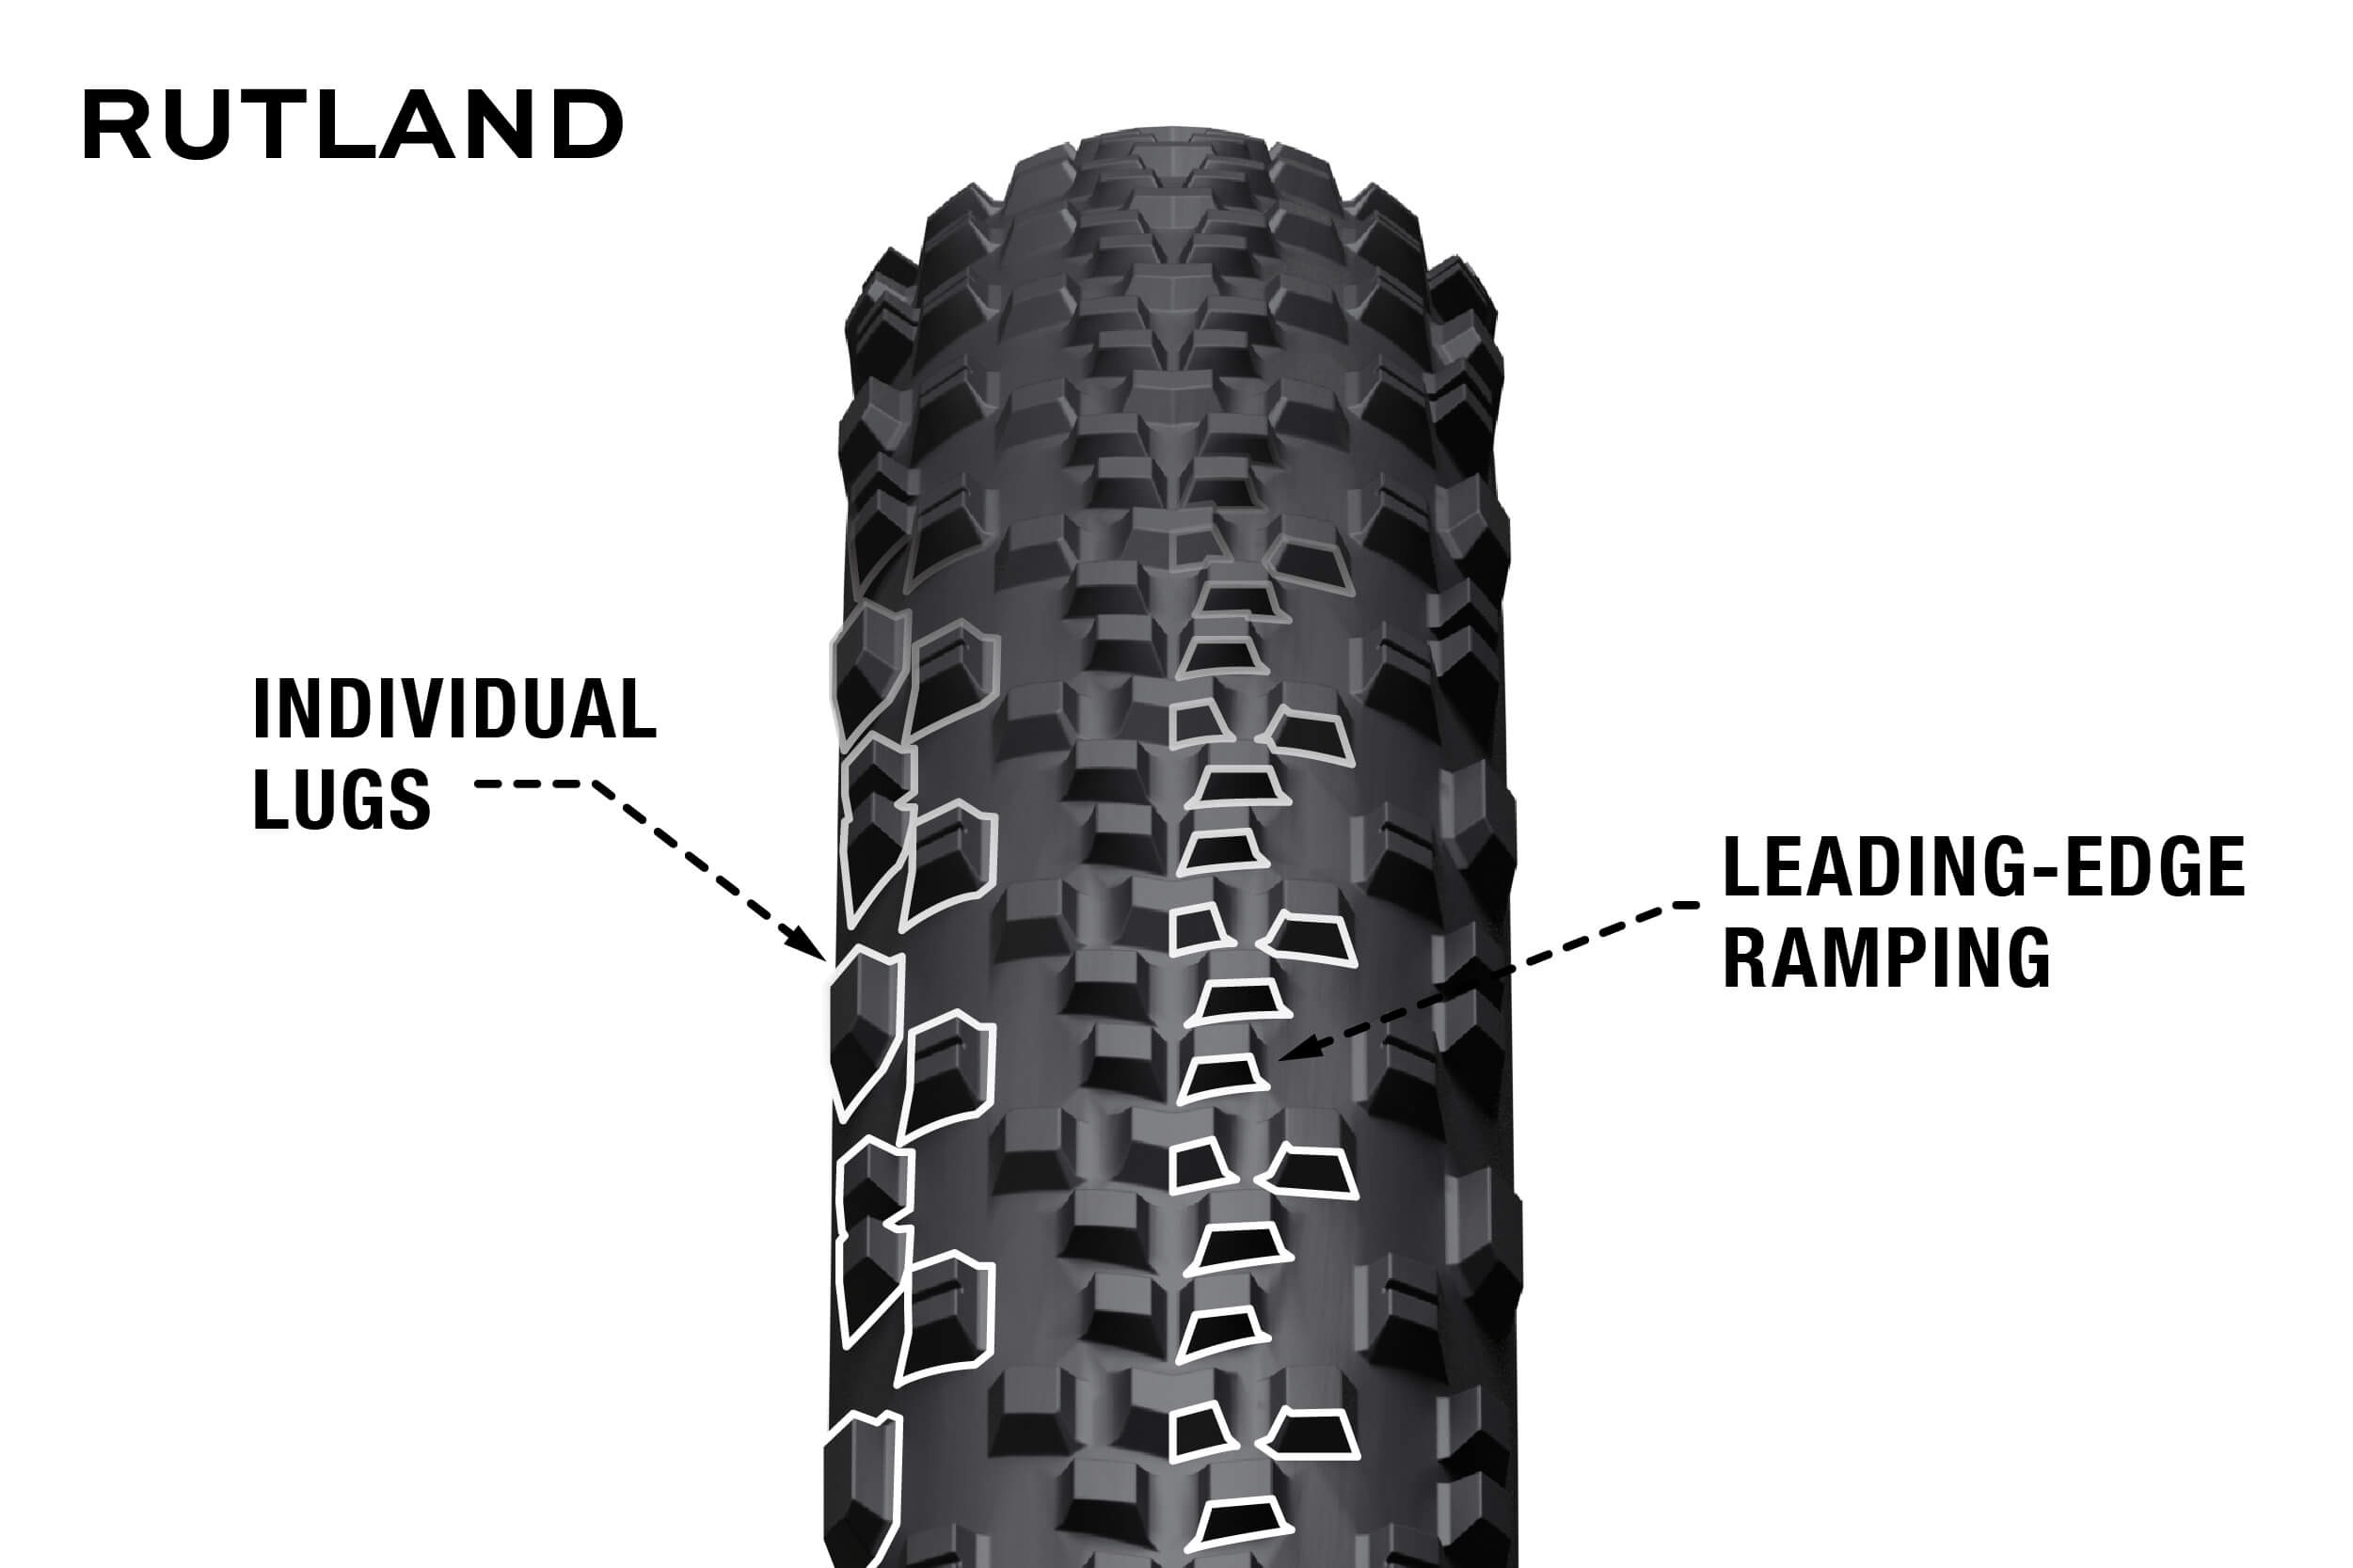 Teravail Rutland tire tread illustration for wet and mixed terrain